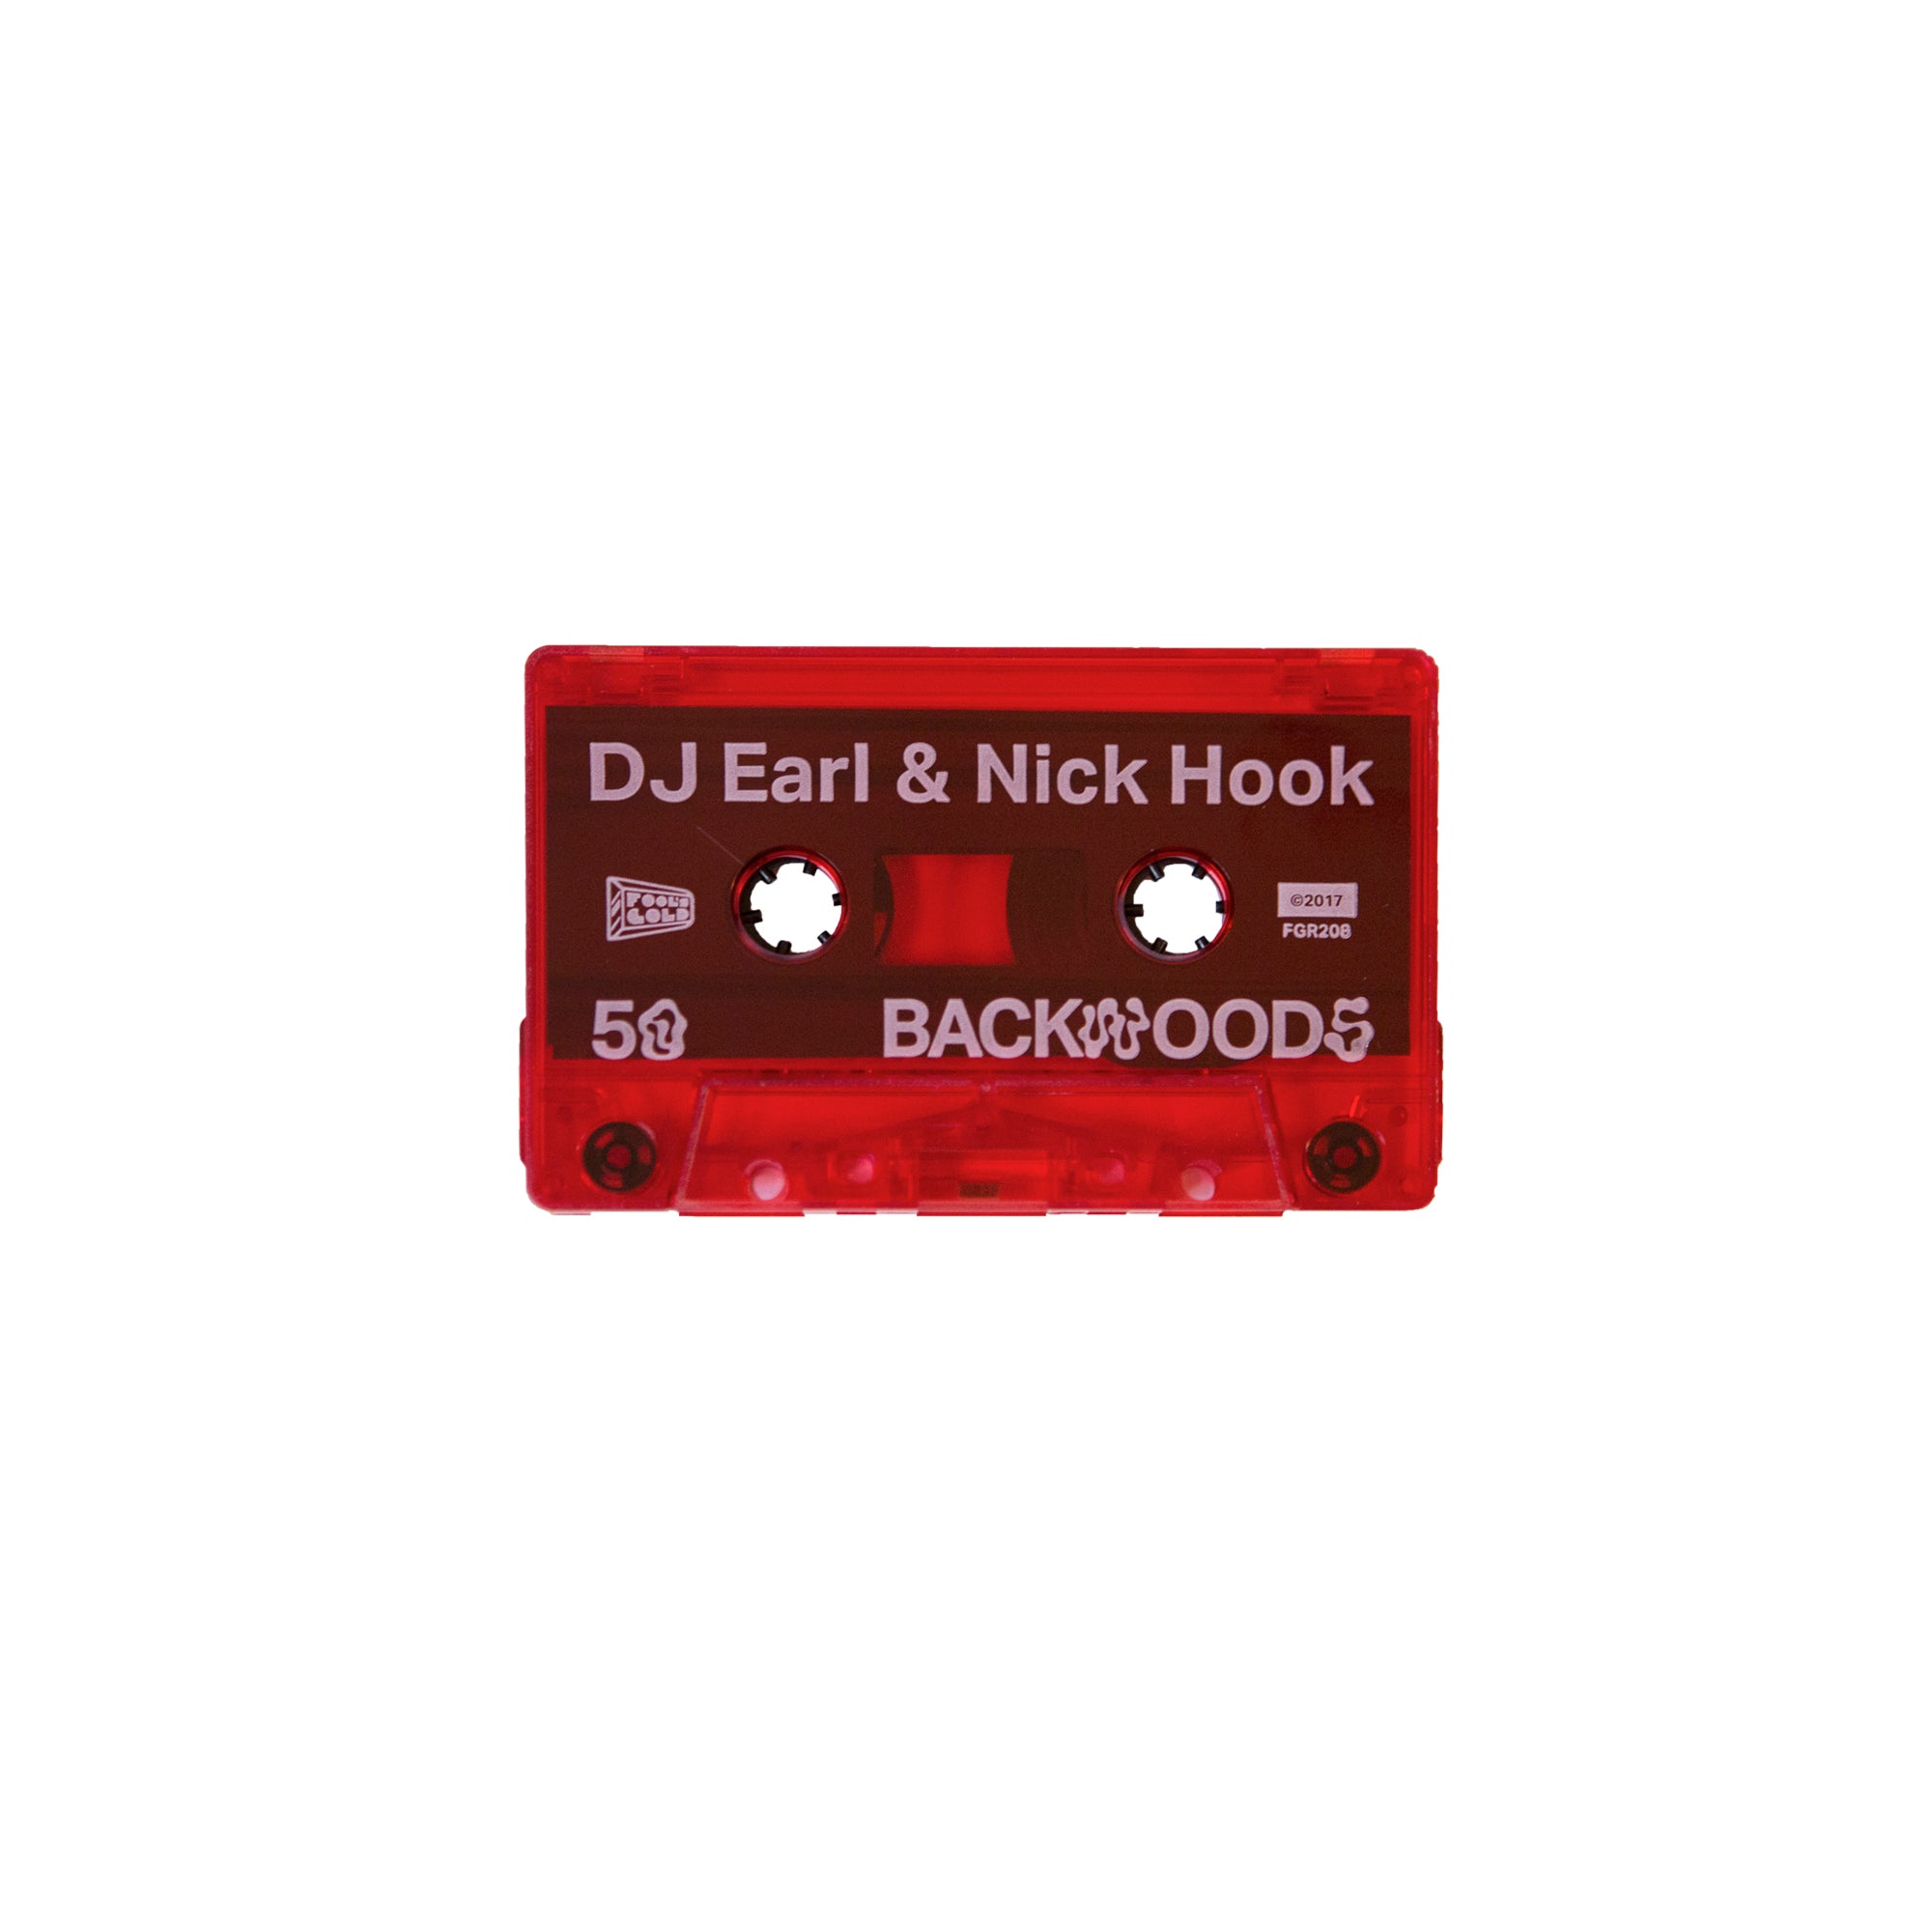 Nick Hook & Dj Earl "50 Backwoods" Cassette